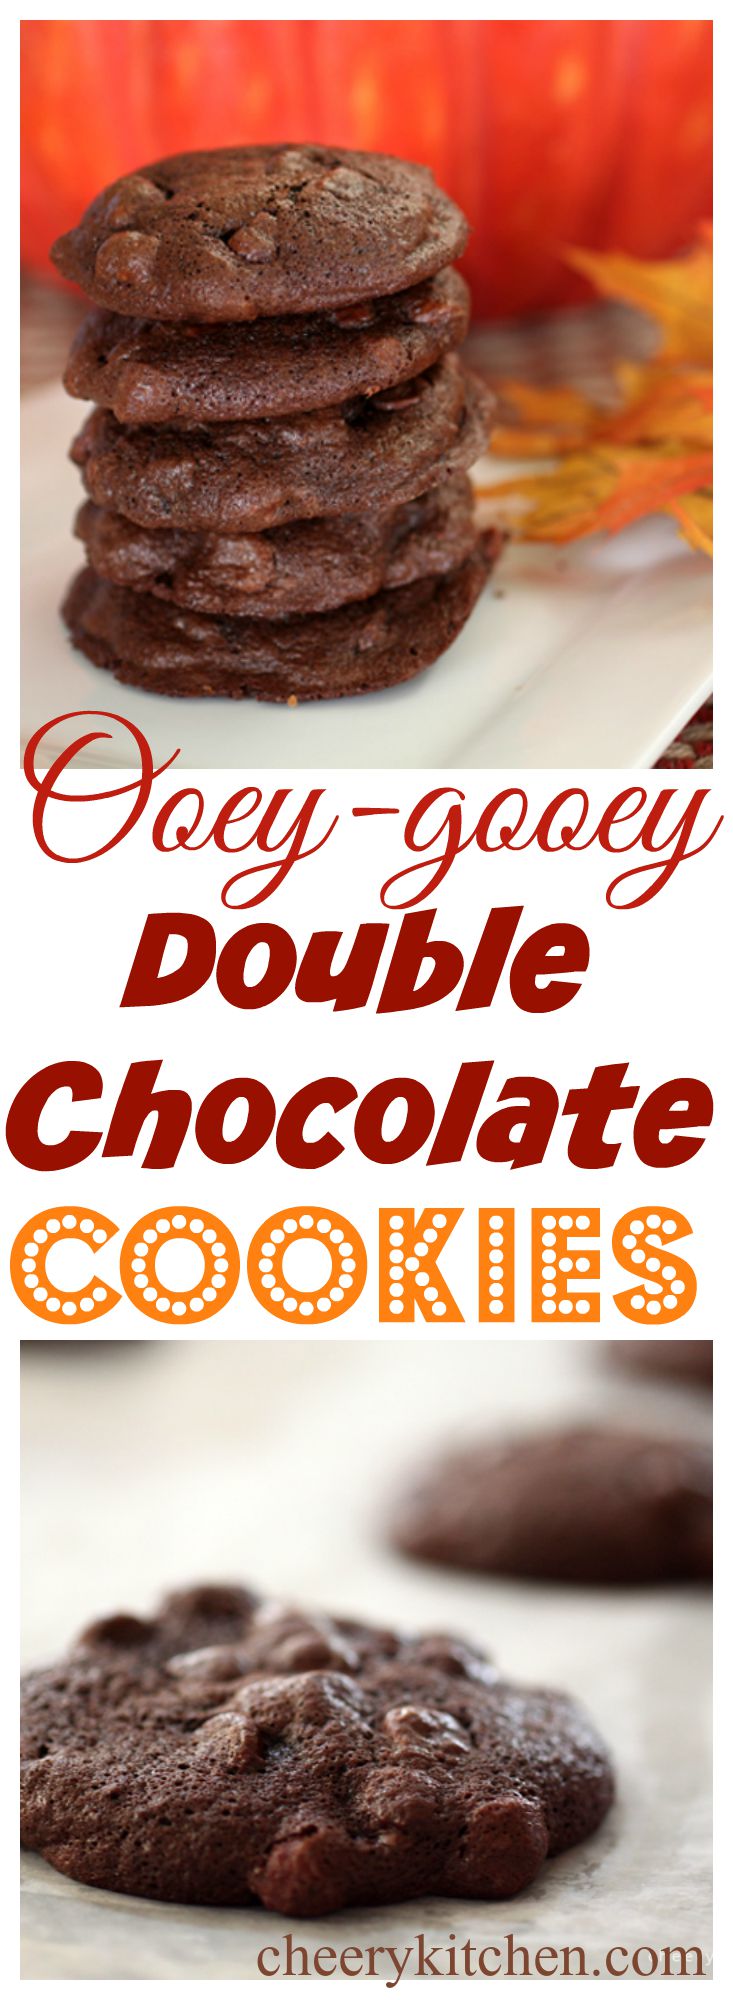 Ooey-gooey Double Chocolate Cookies